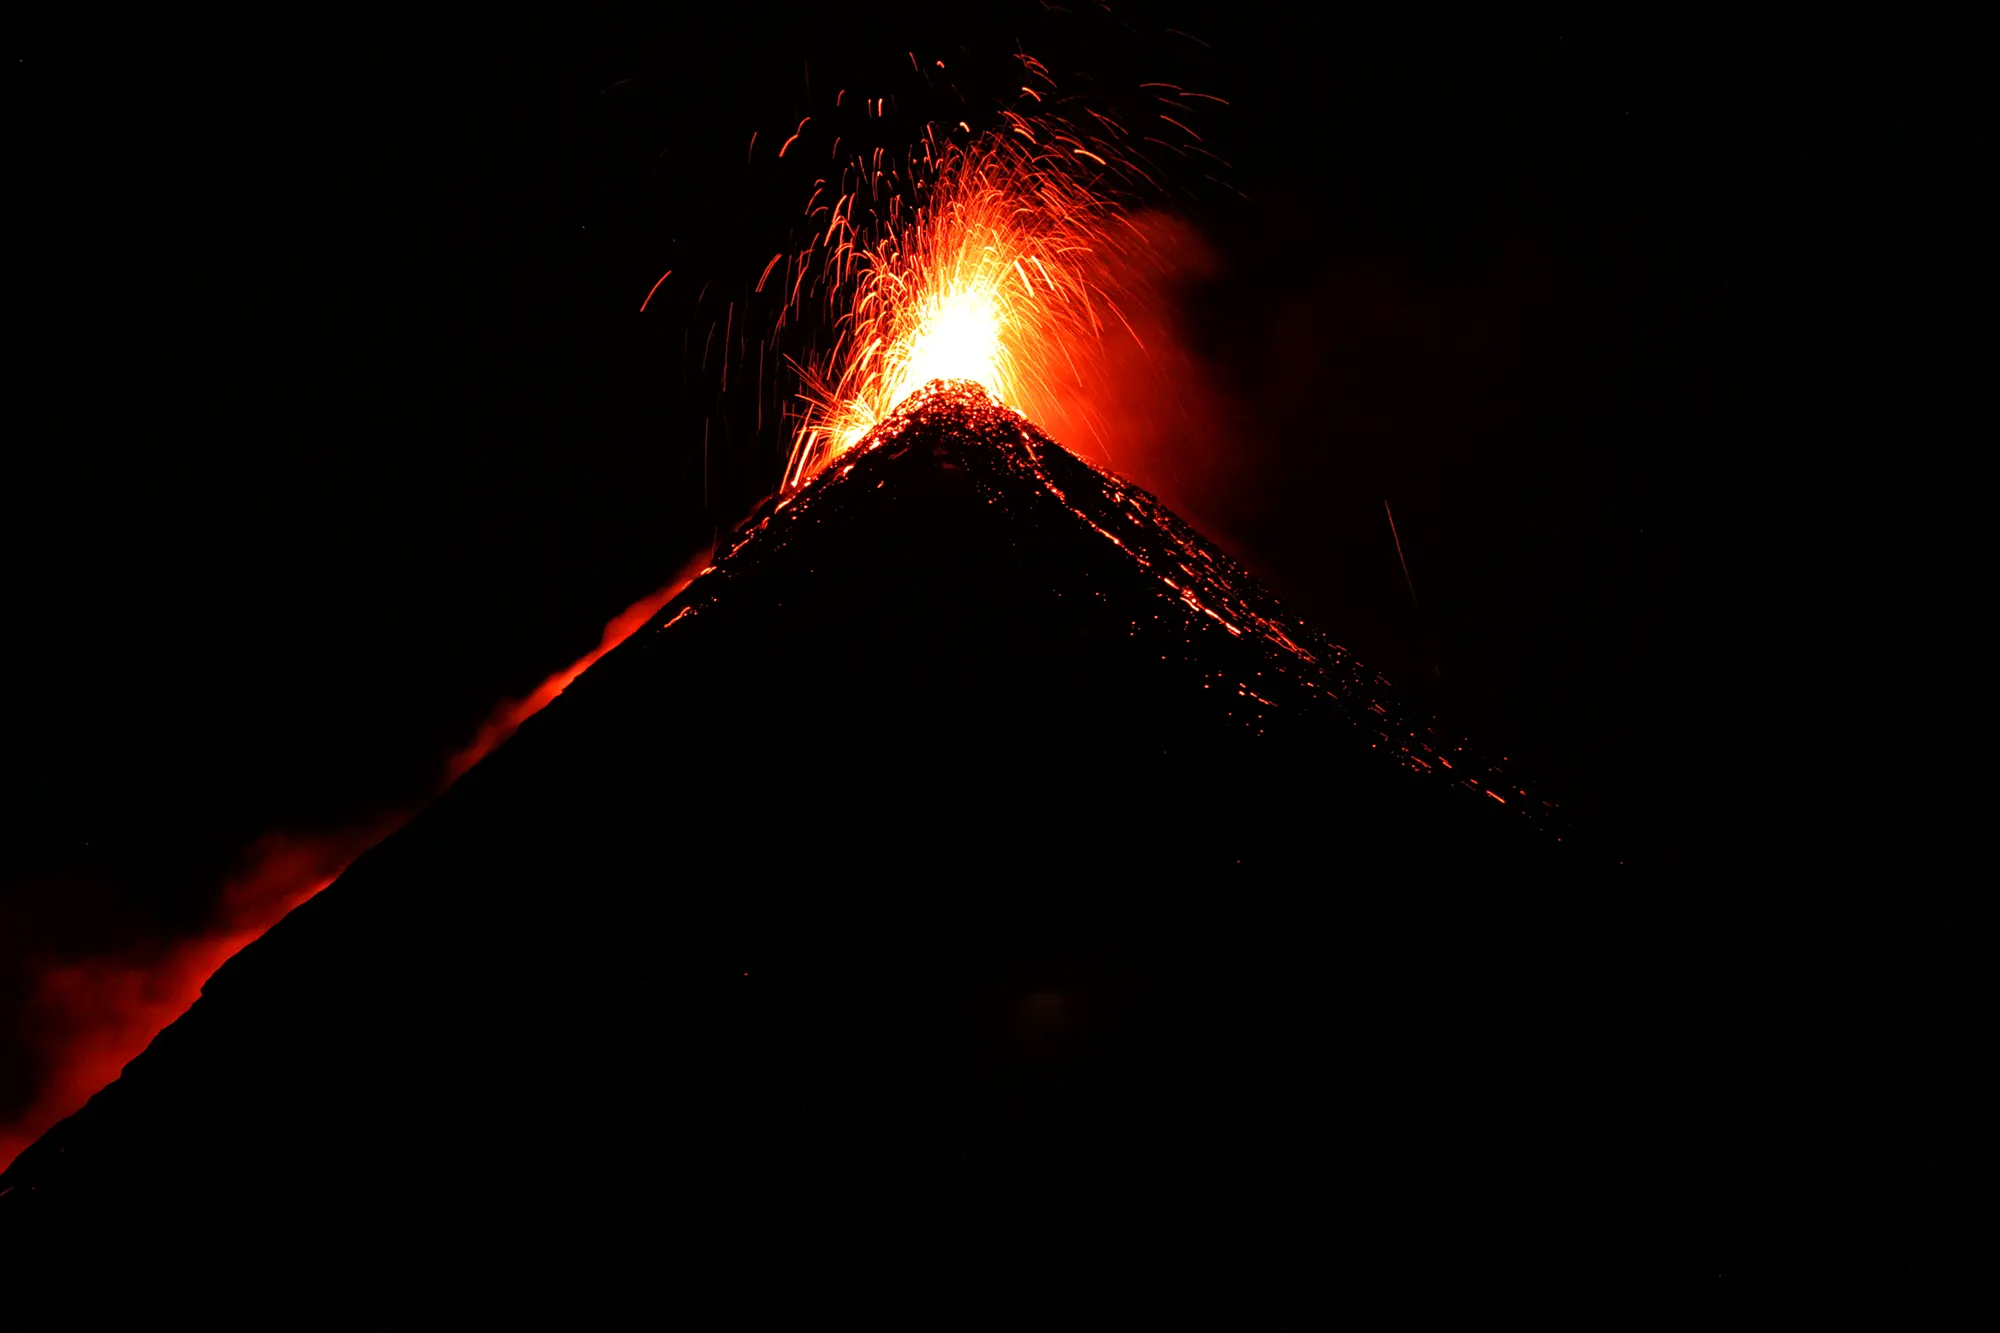 Volcán Acatenango hike in Guatemala